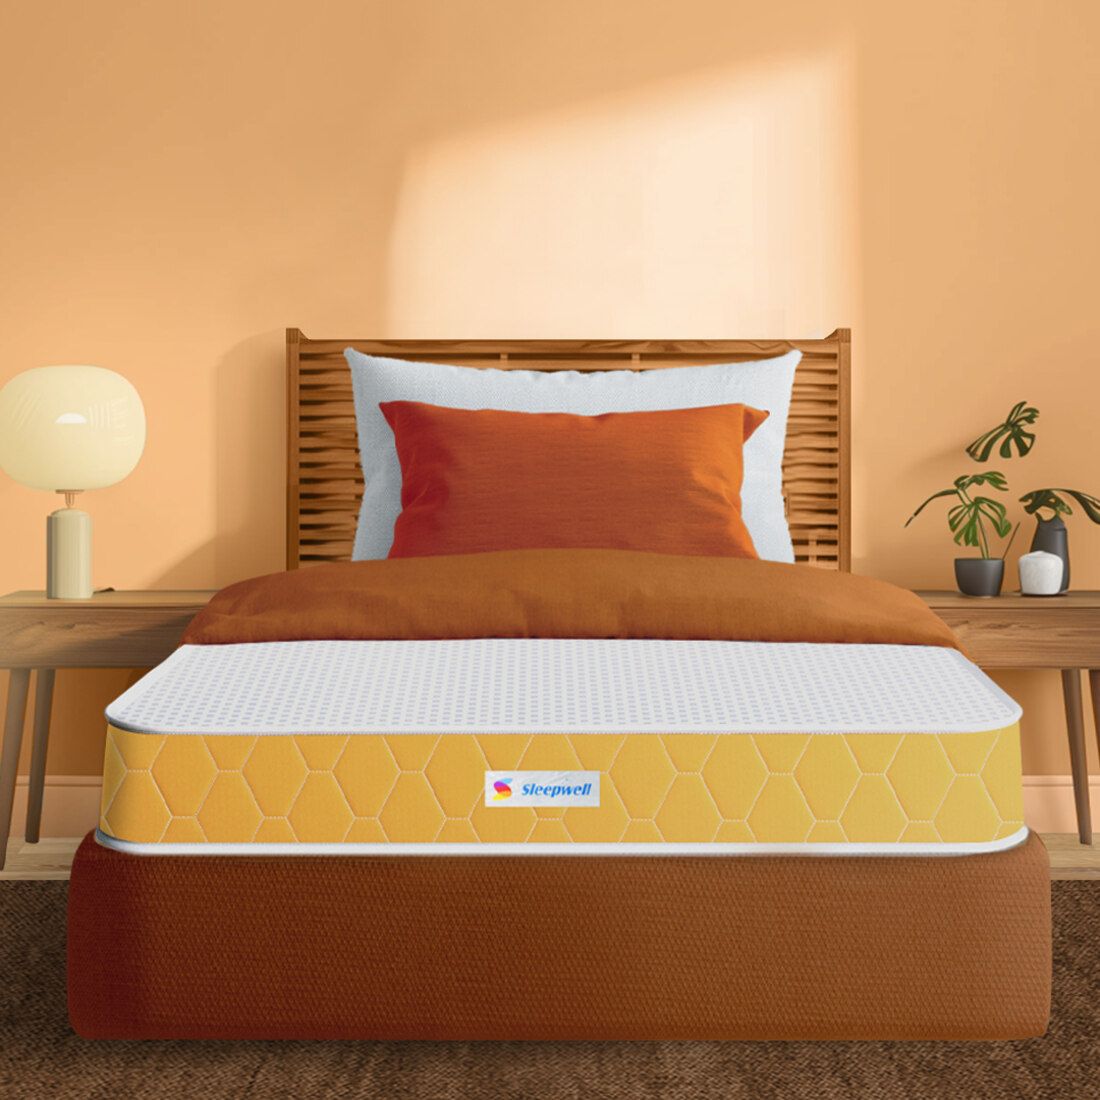 Sleepwell Dual Mattress | Reversible | High Density (HD) Foam | 8-inch Single Bed Size,?Medium Soft & Hard (Orange,75x35X8)